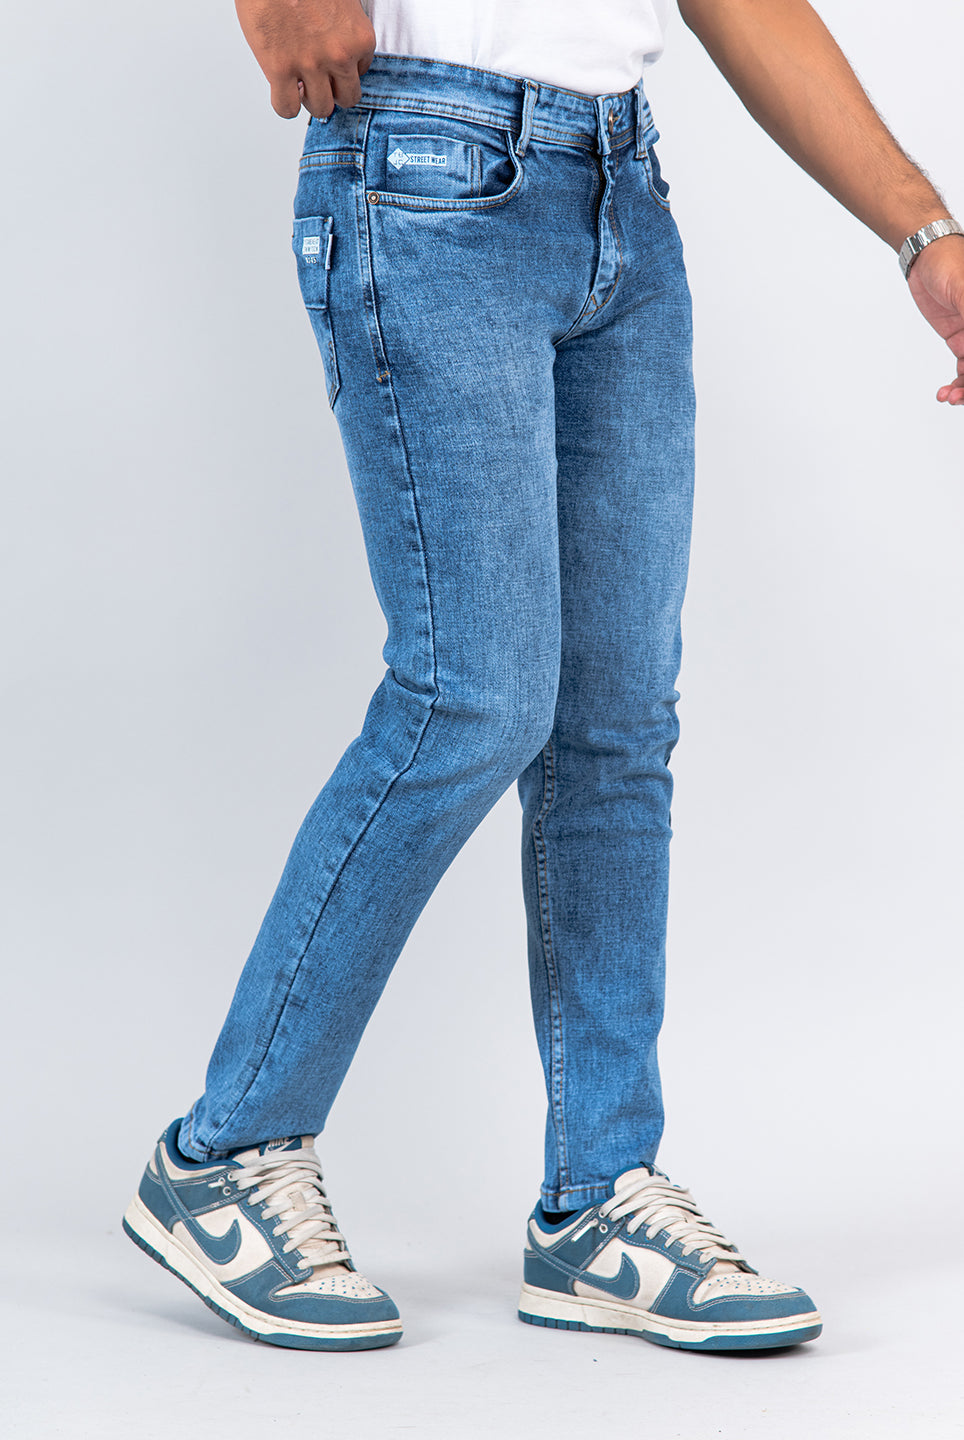 loose denim jeans